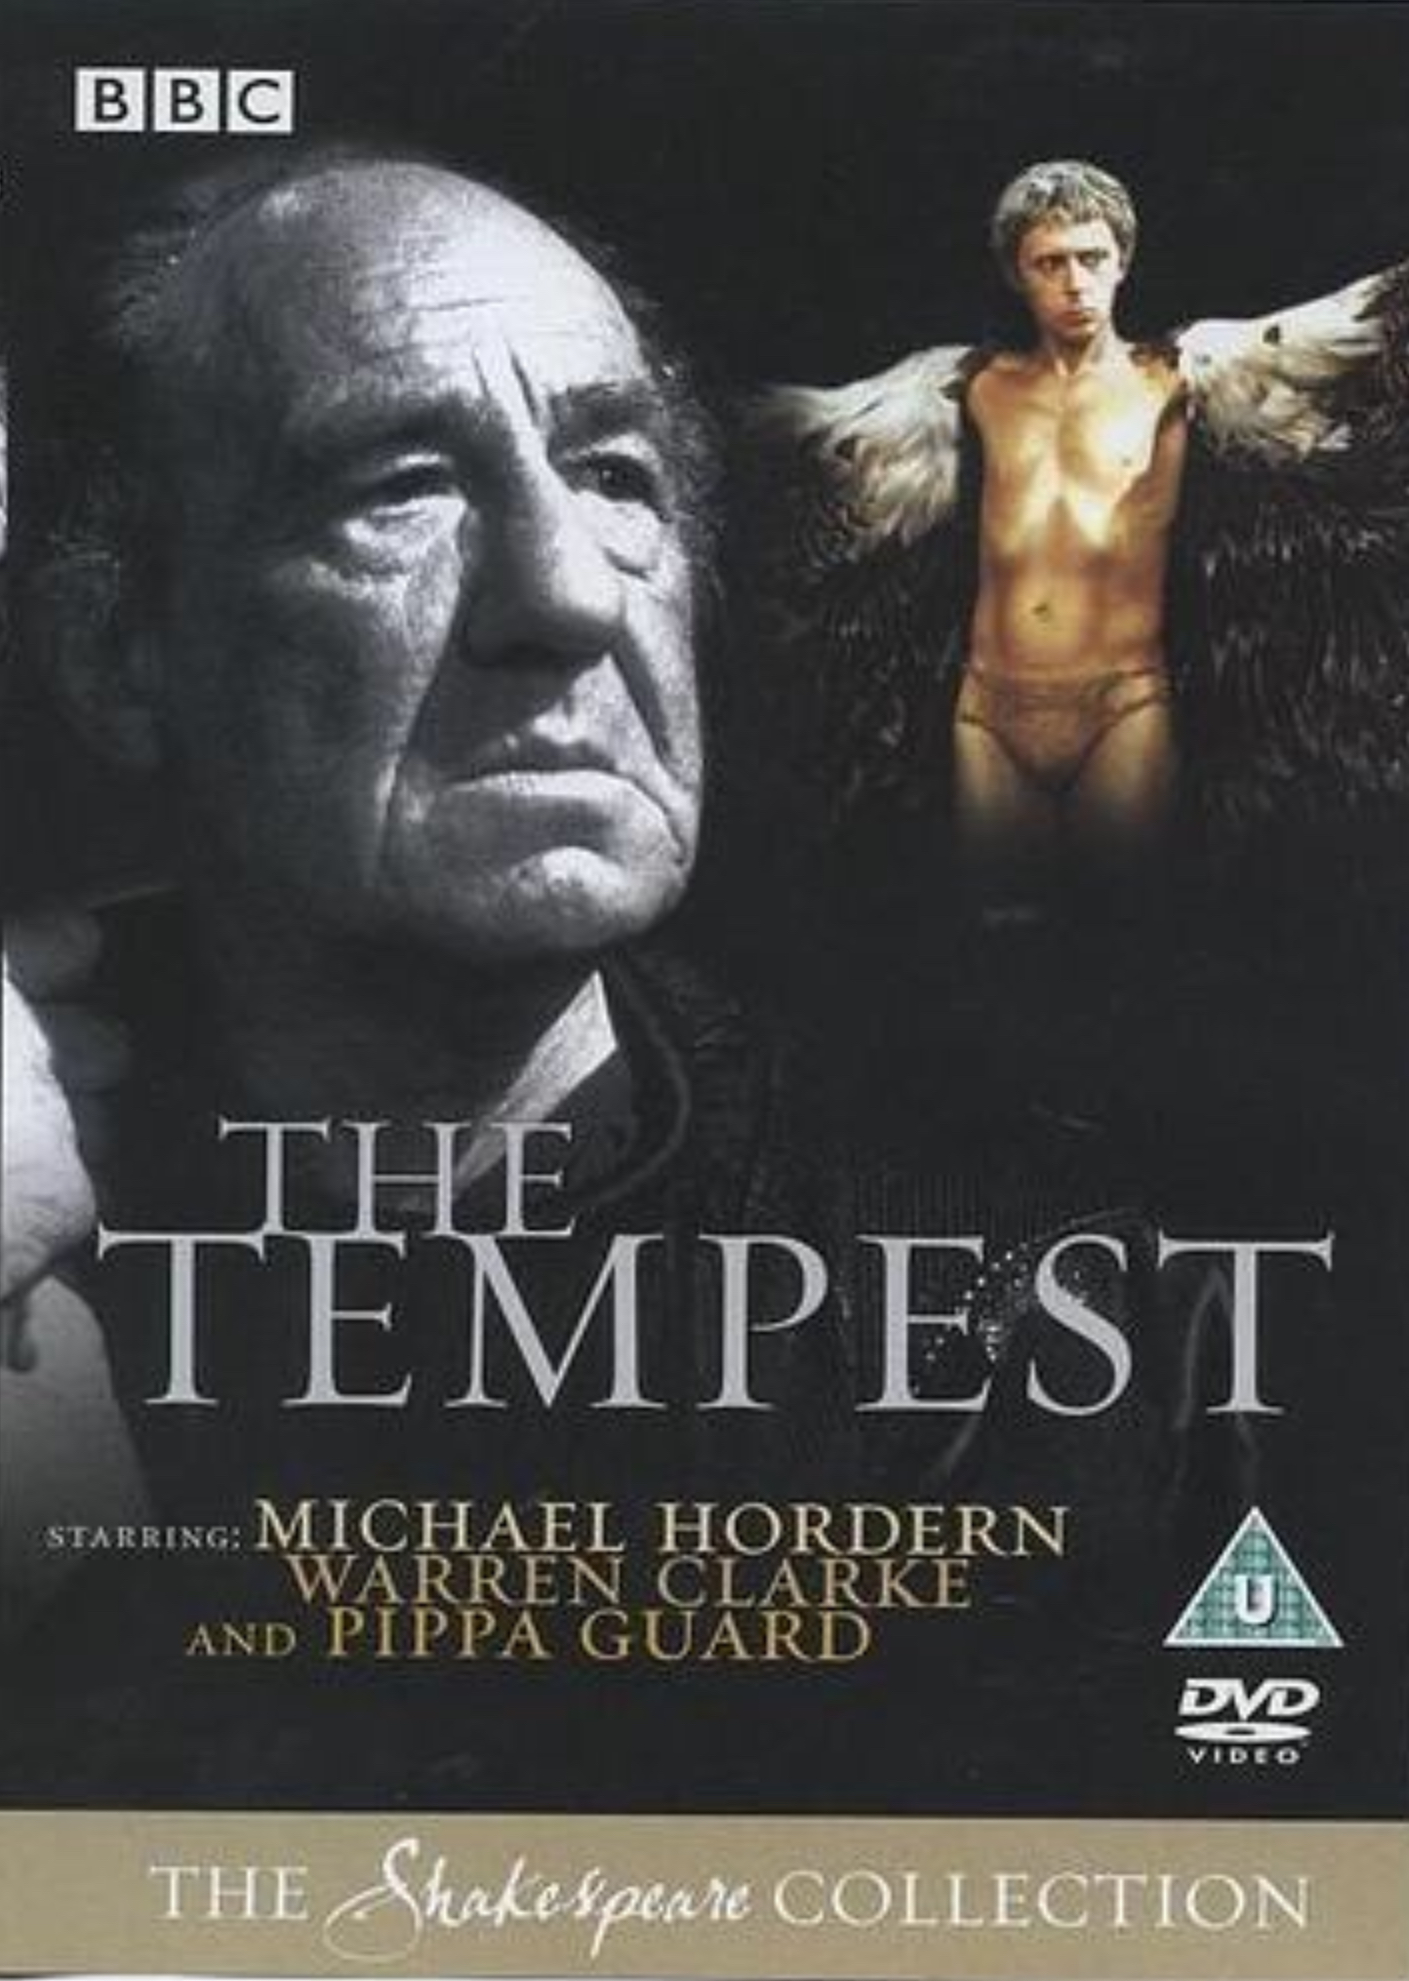 The Tempest (1980) Screenshot 2 